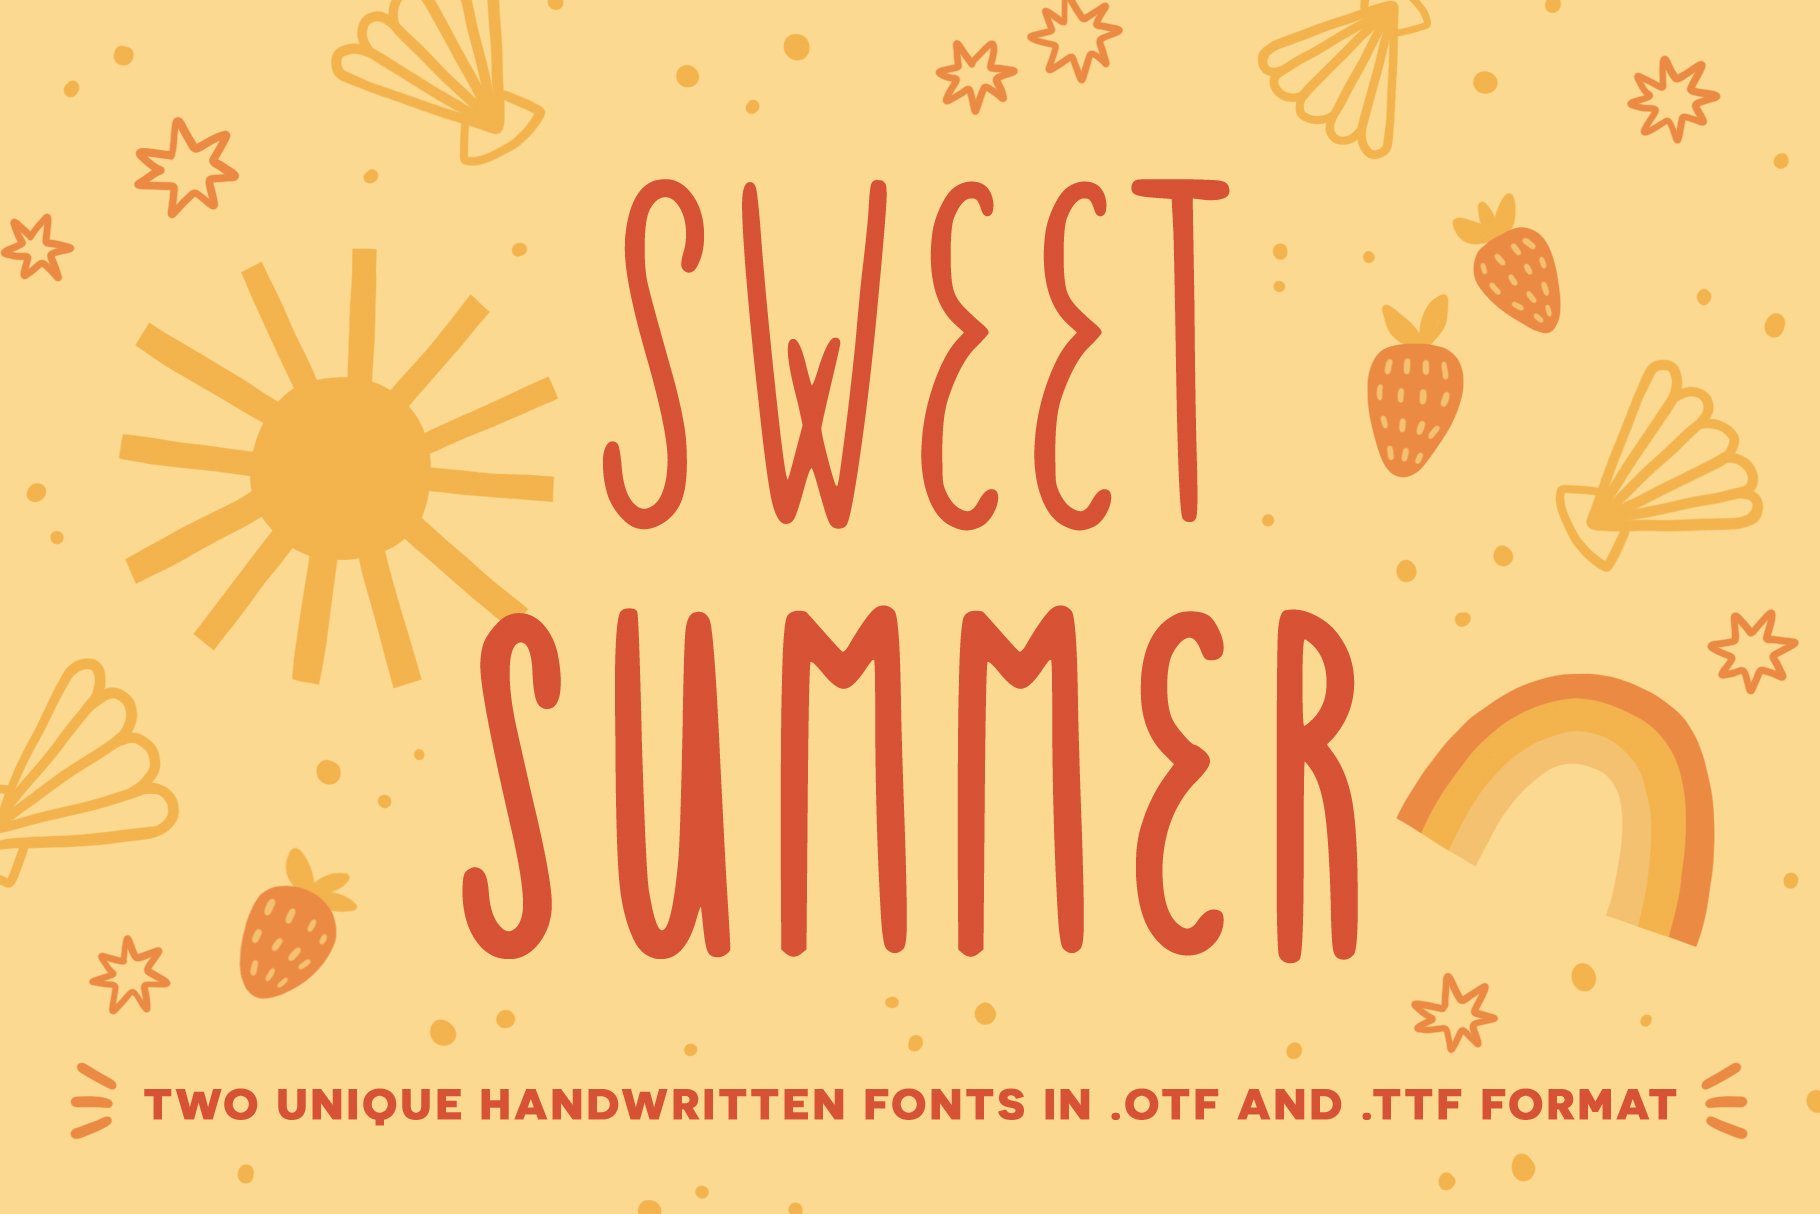 Sweet Summer handwritten fonts cover image.